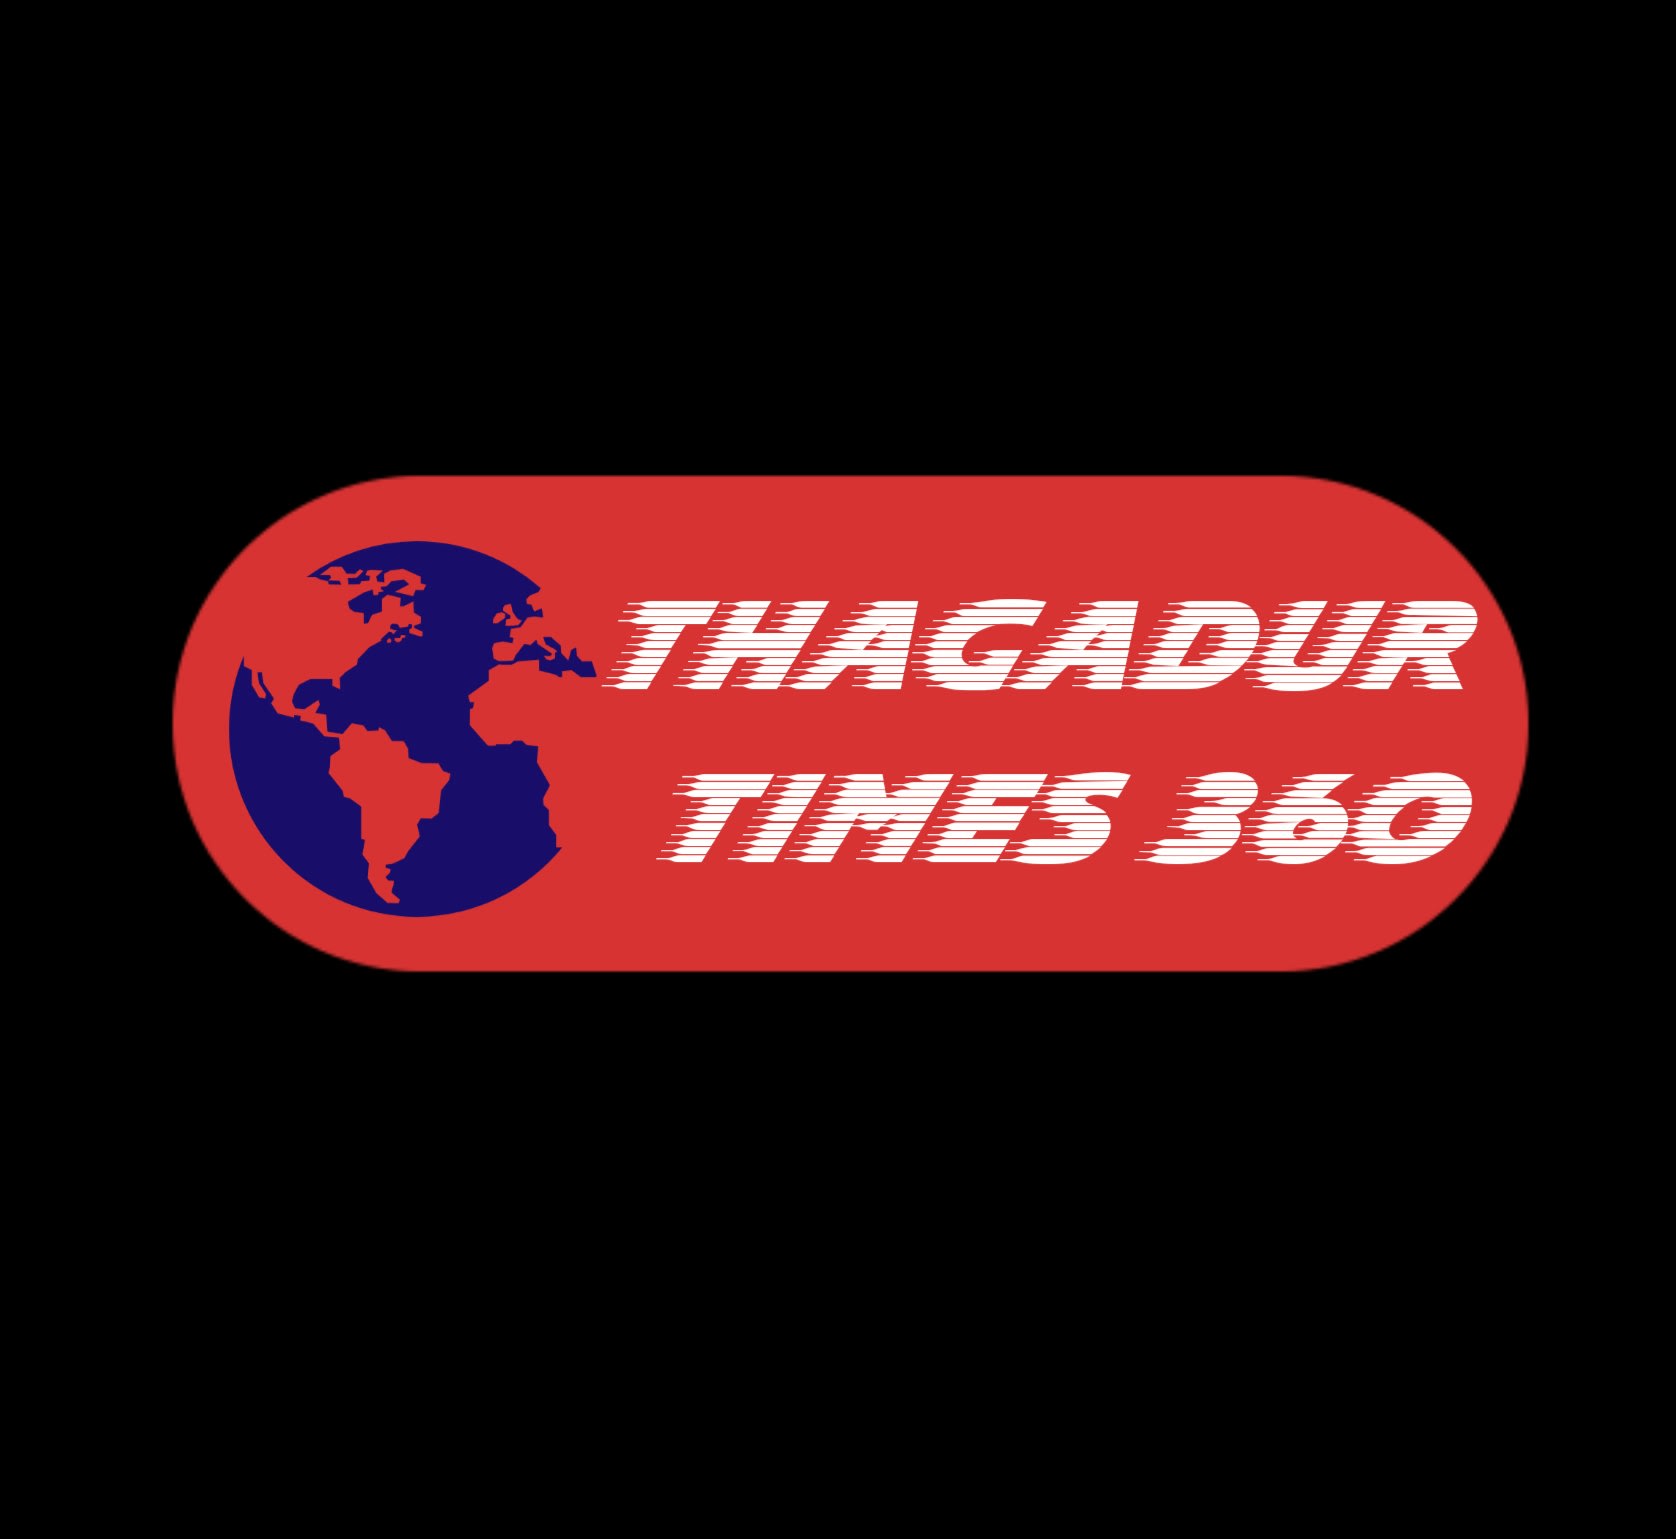 The Gadur Times 360